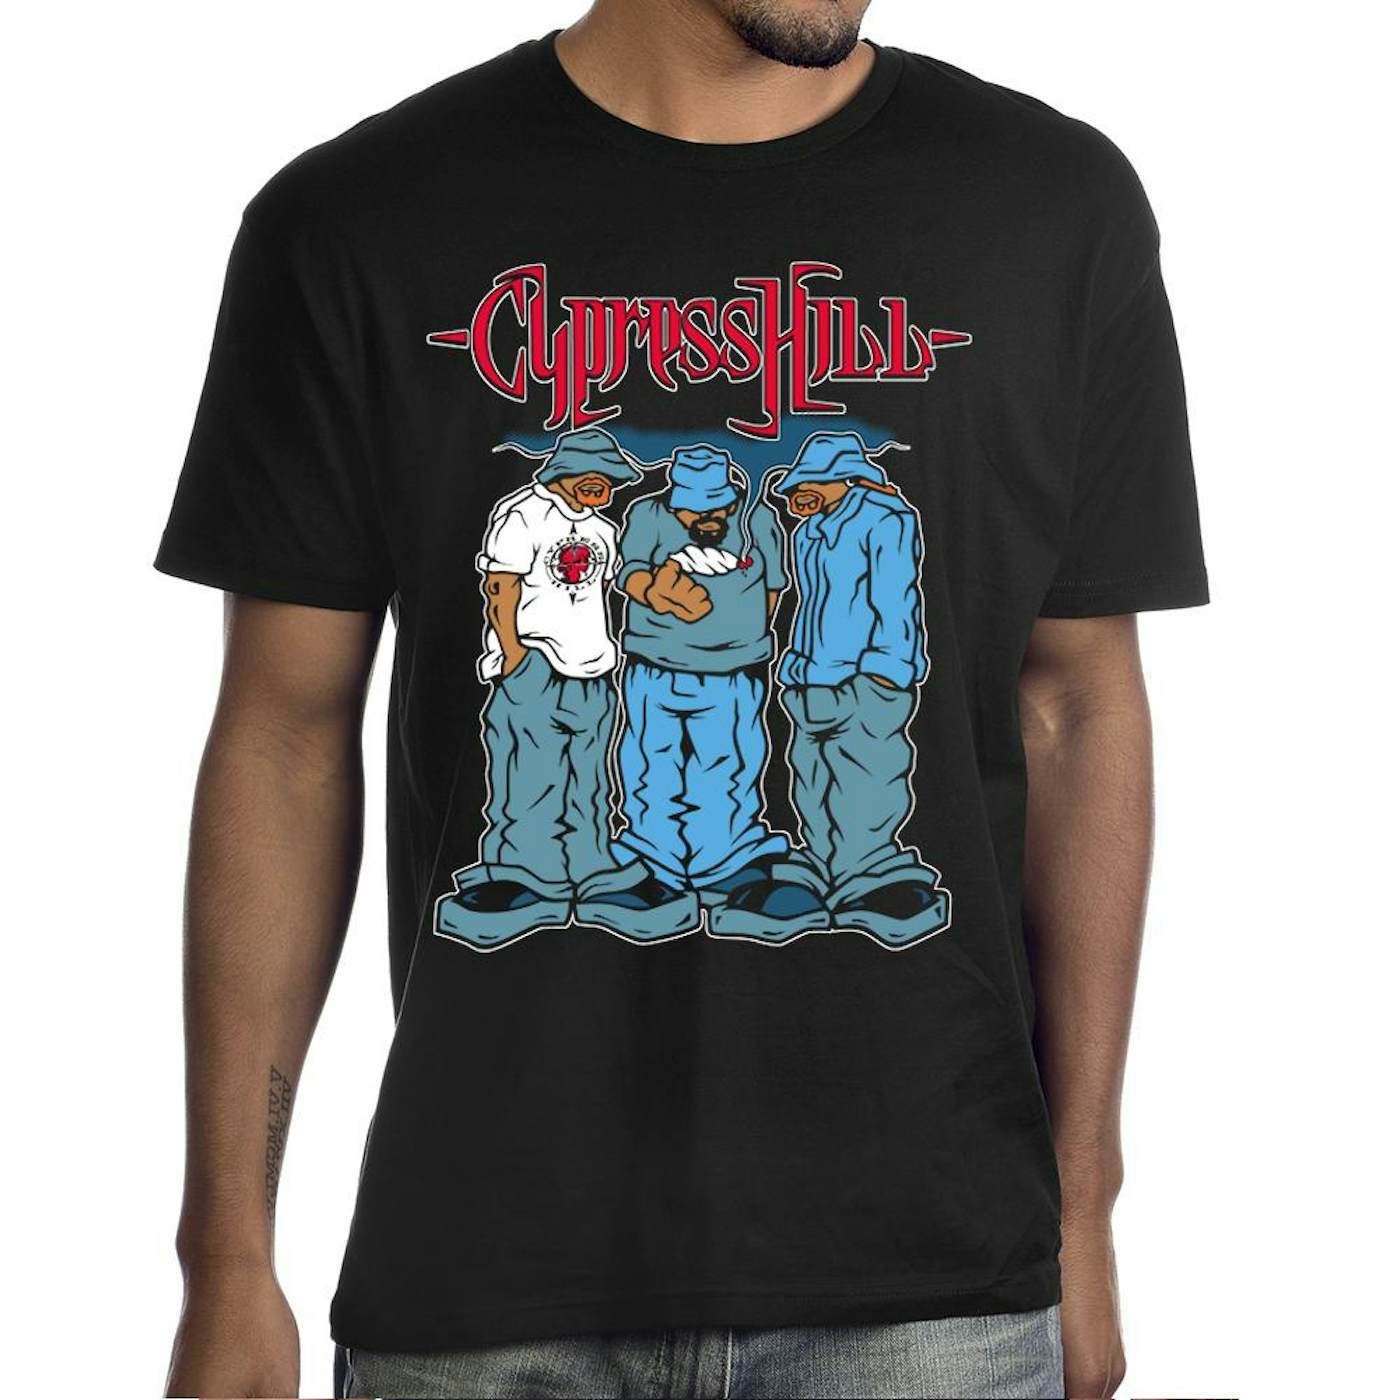 Cypress Hill "Blunted" T-Shirt